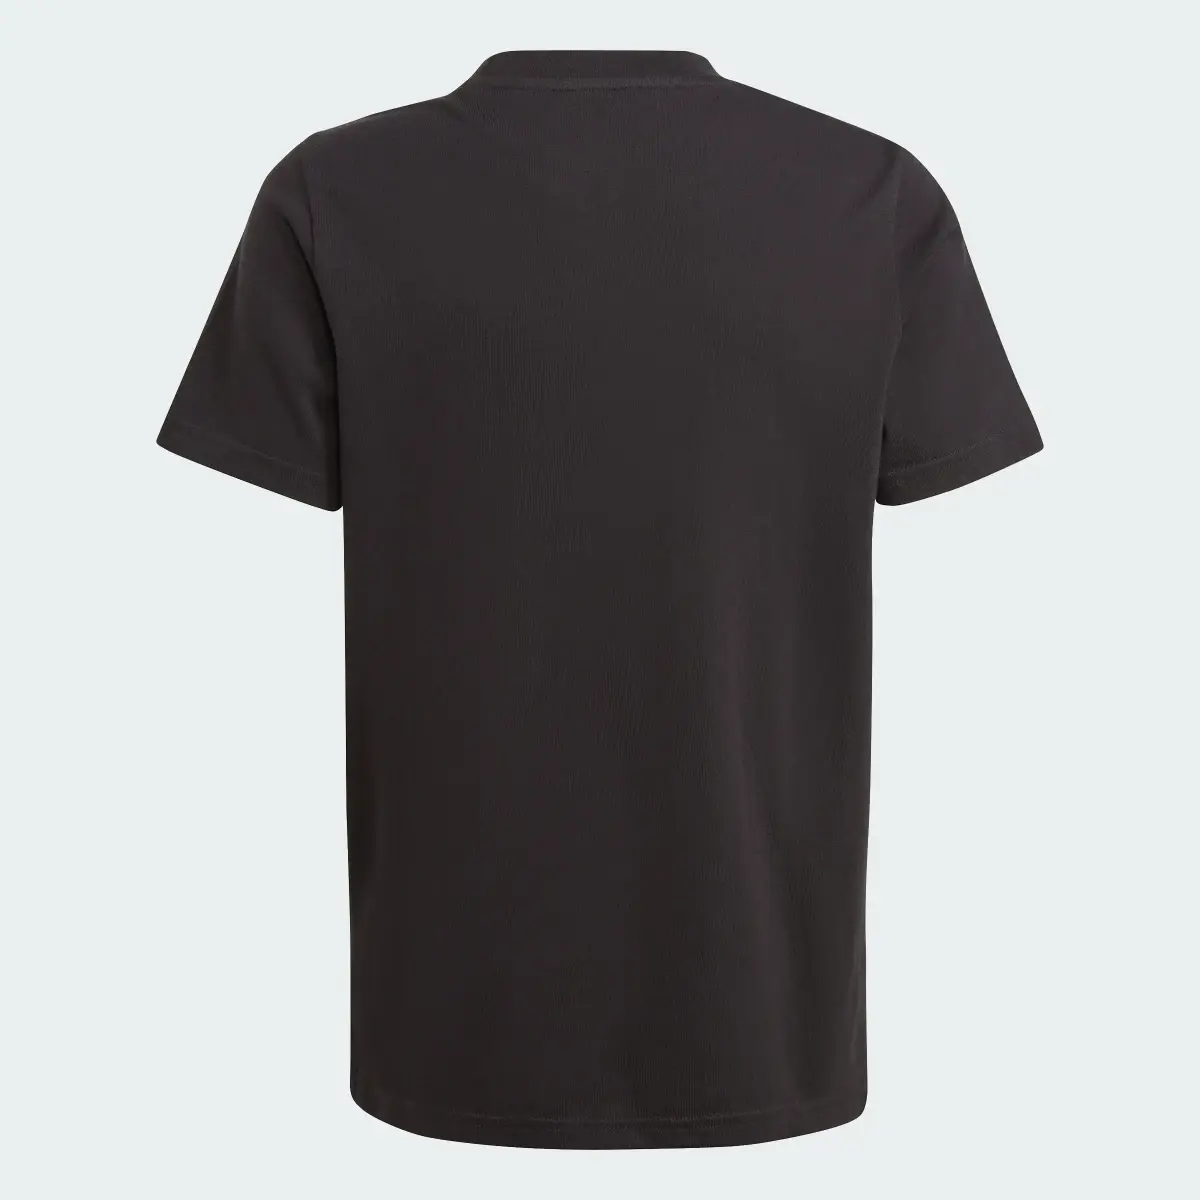 Adidas T-shirt dos All Blacks. 2